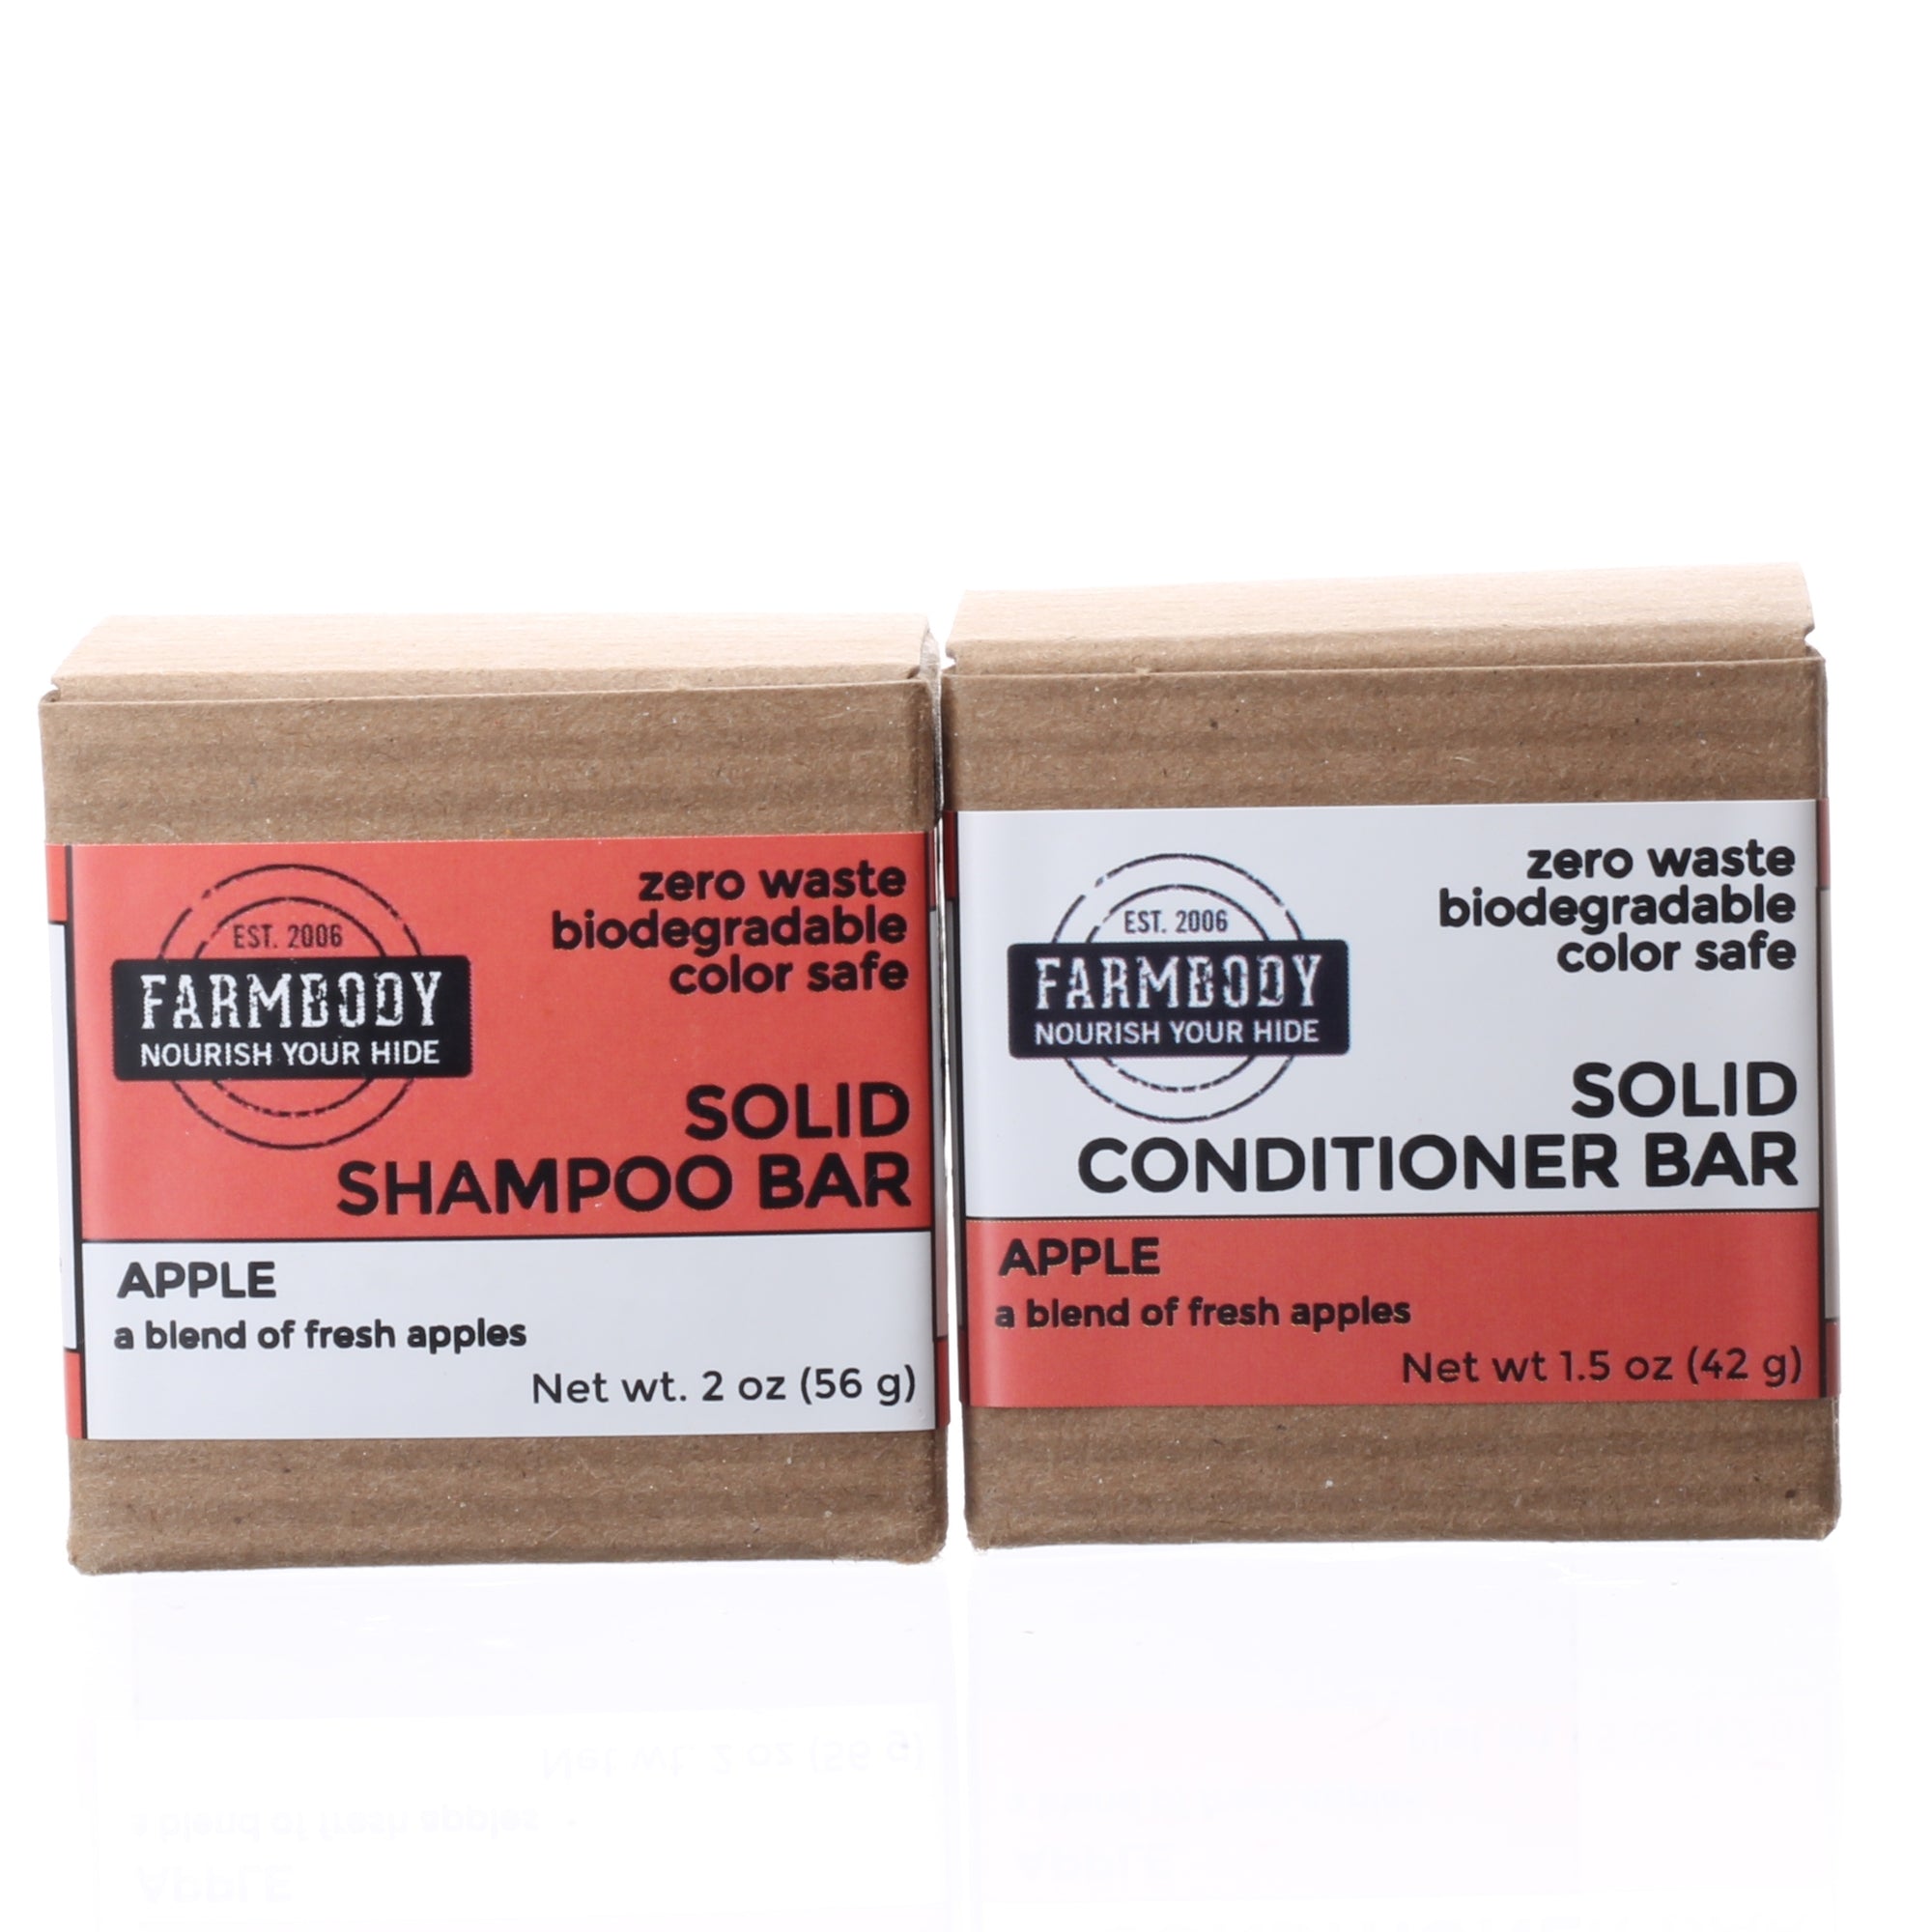 Farmbody solid shampoo and conditioner set sulfate free conditioner free in apple fragrance color safe zero waste